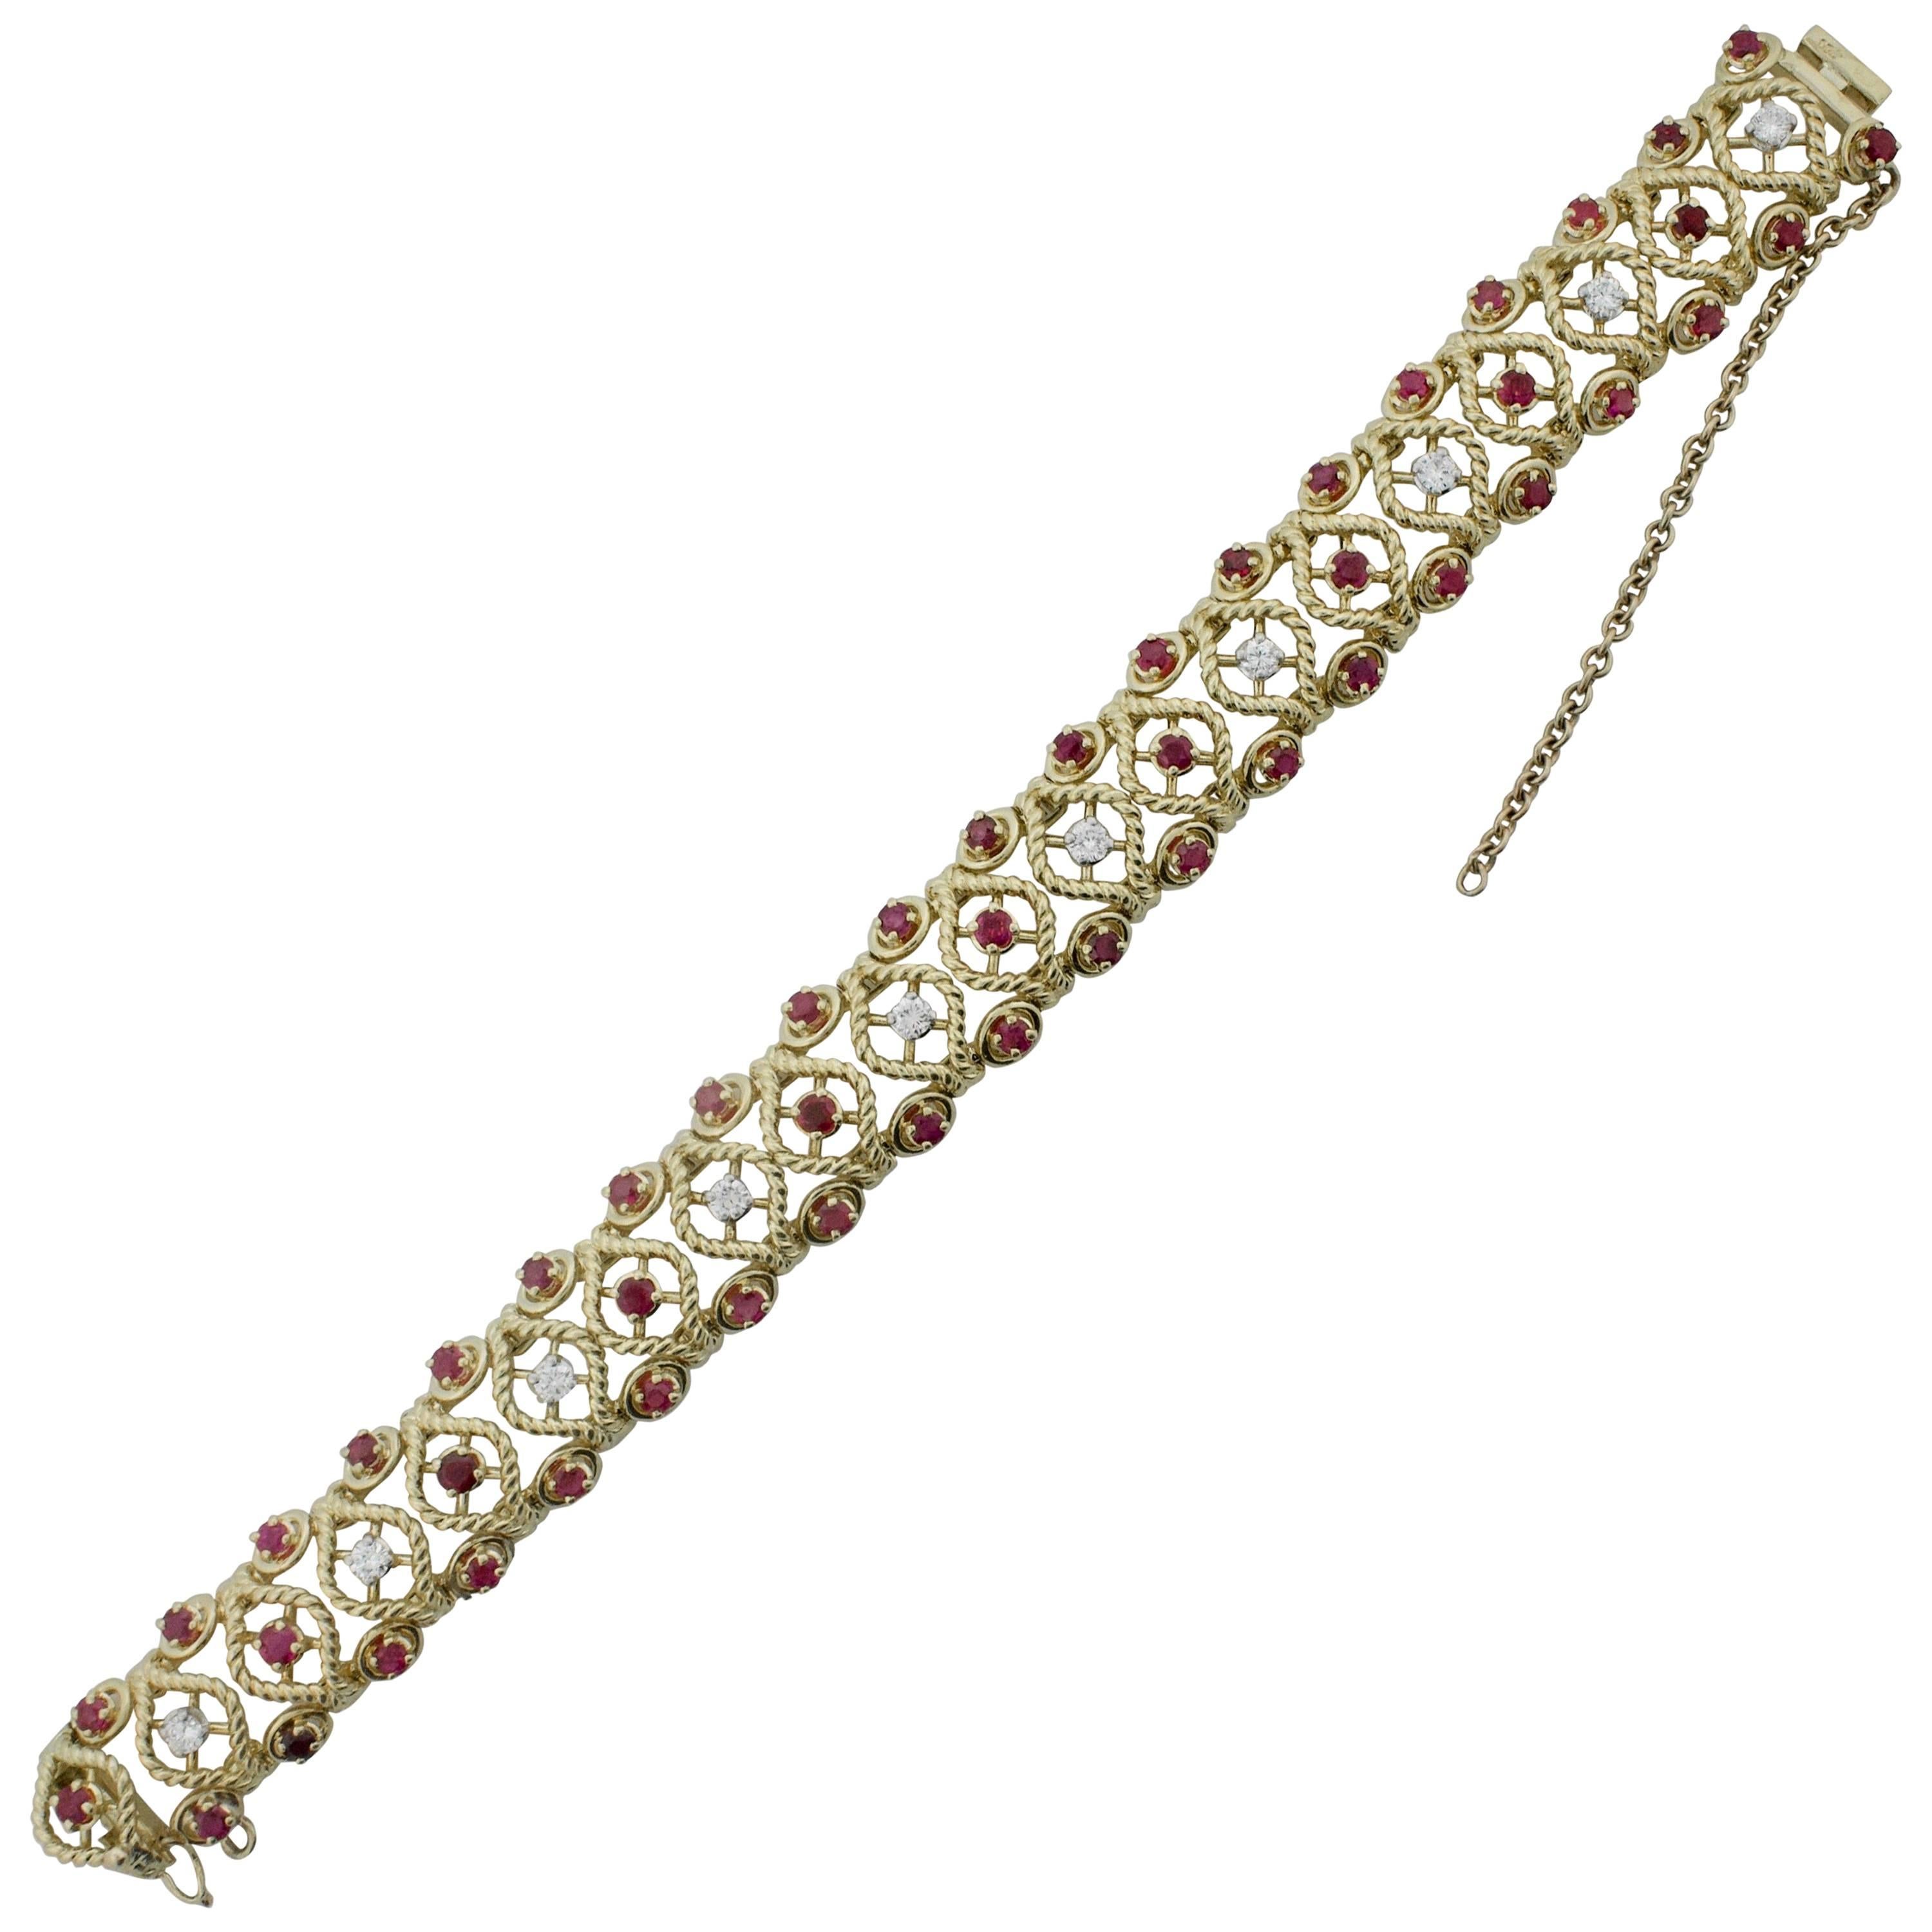 Gubelin Ruby and Diamond Bracelet in 18 Karat Yellow Gold, circa 1950s